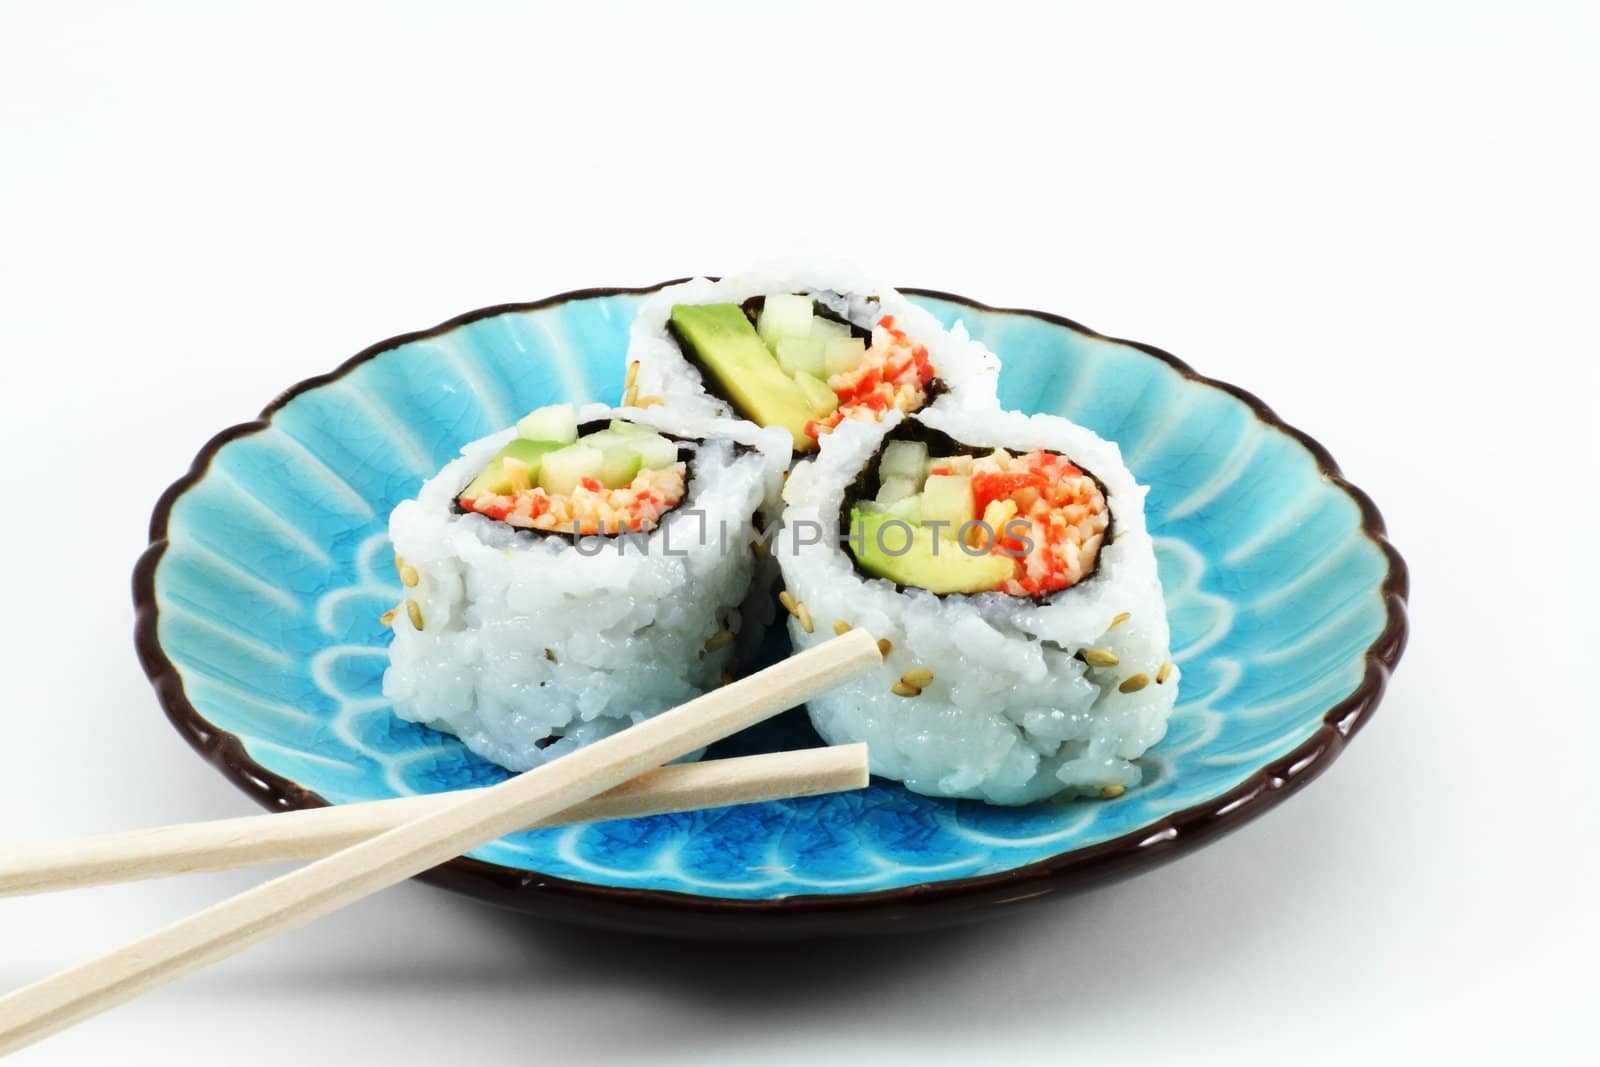 Sushi and CHopsticks by jasony00